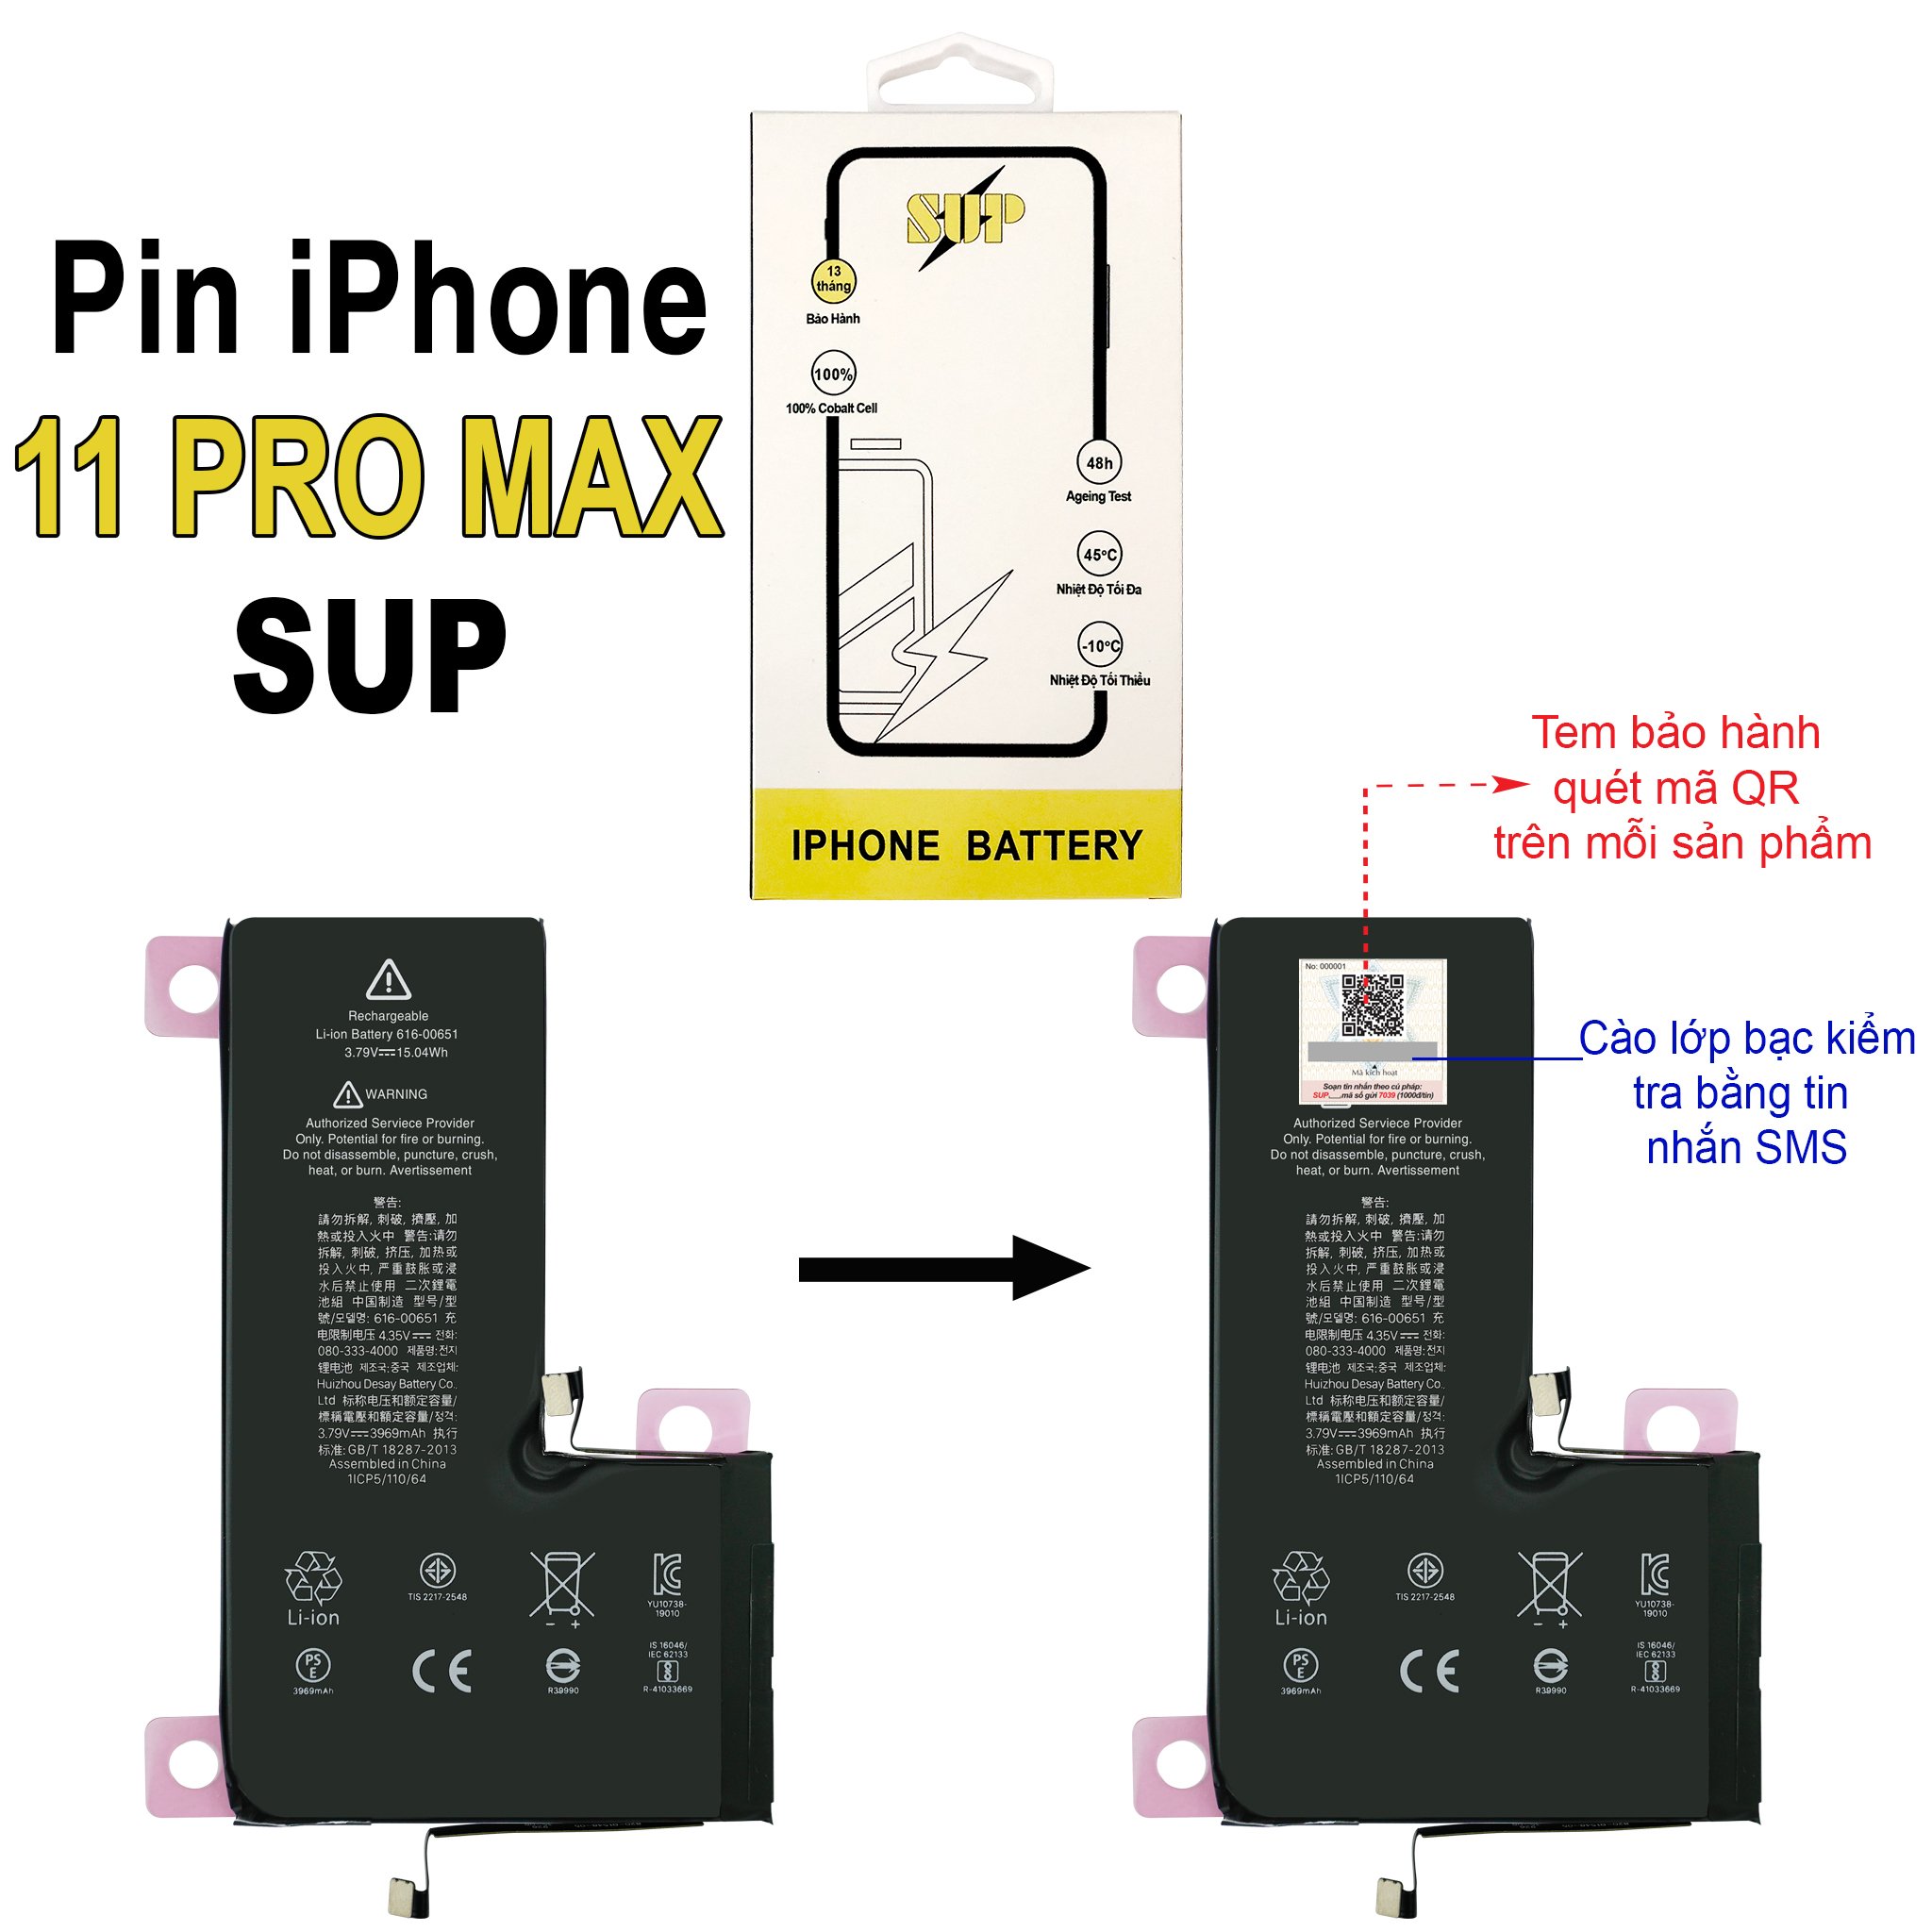 Pin iPhone 11 Pro Max SUP